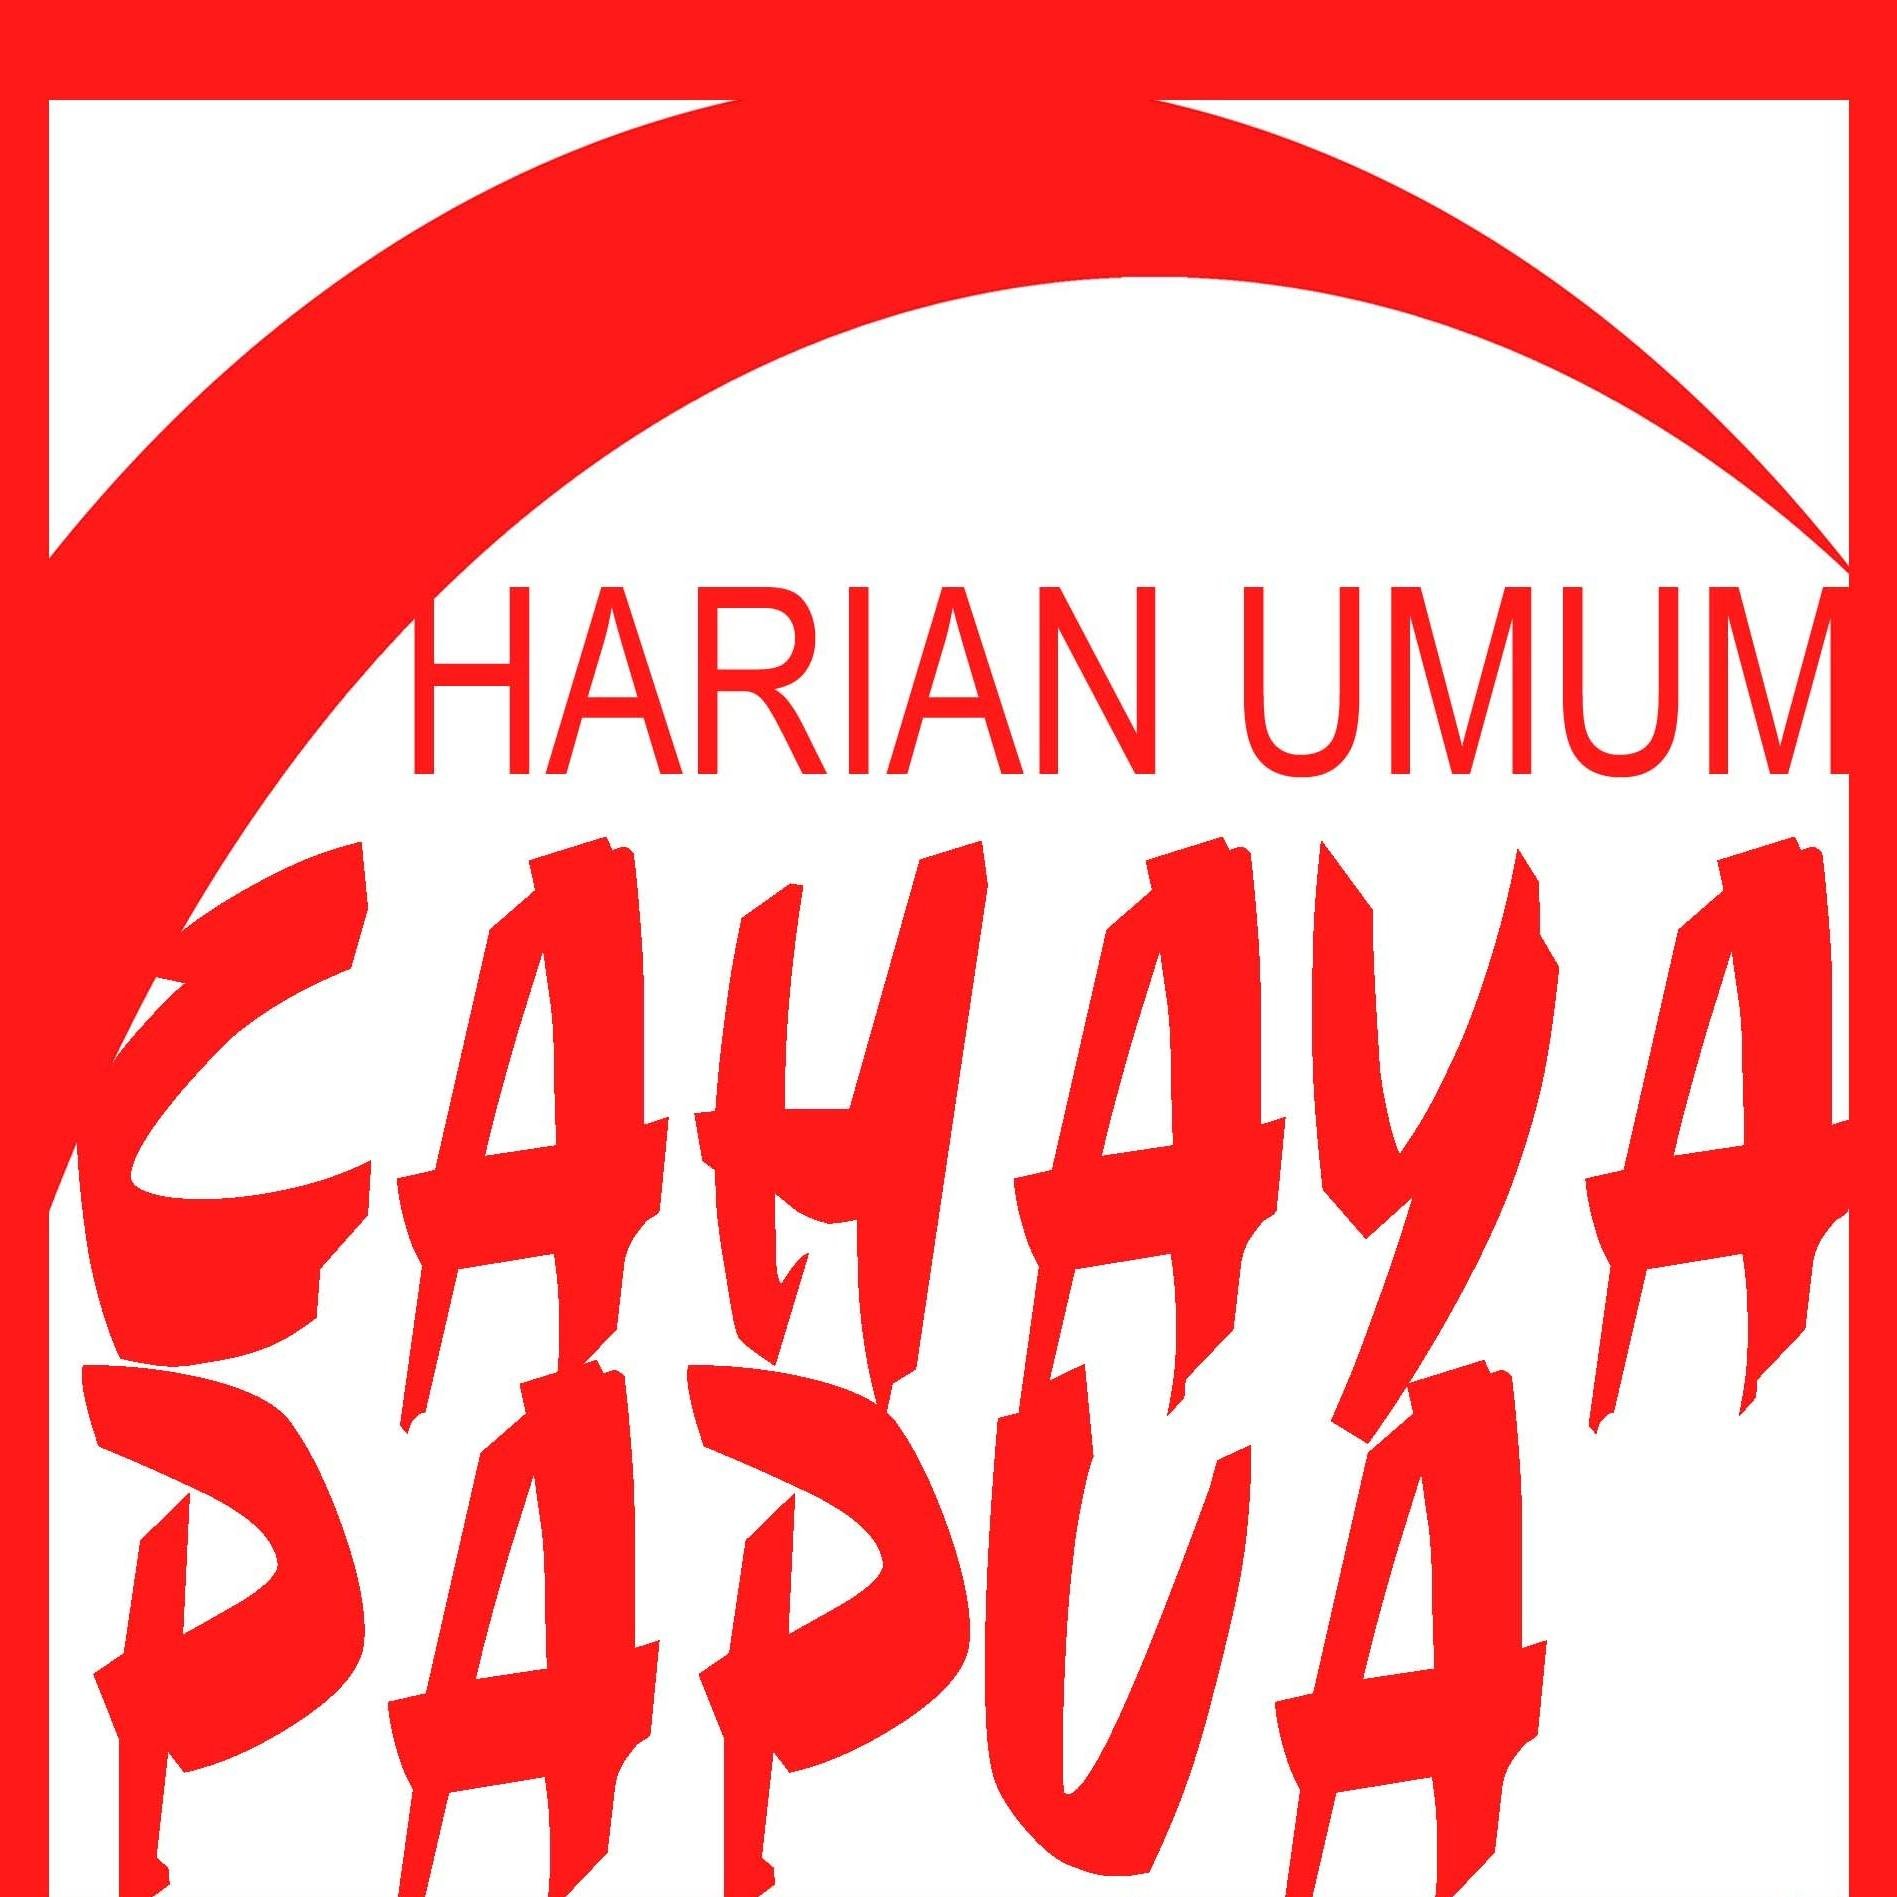 CAHAYA_PAPUA.com merupakan halaman twitter resmi portal berita online http://t.co/EckmPFho2f (SKH Cahaya Papua group), berbasis di Manokwari, Papua Barat.